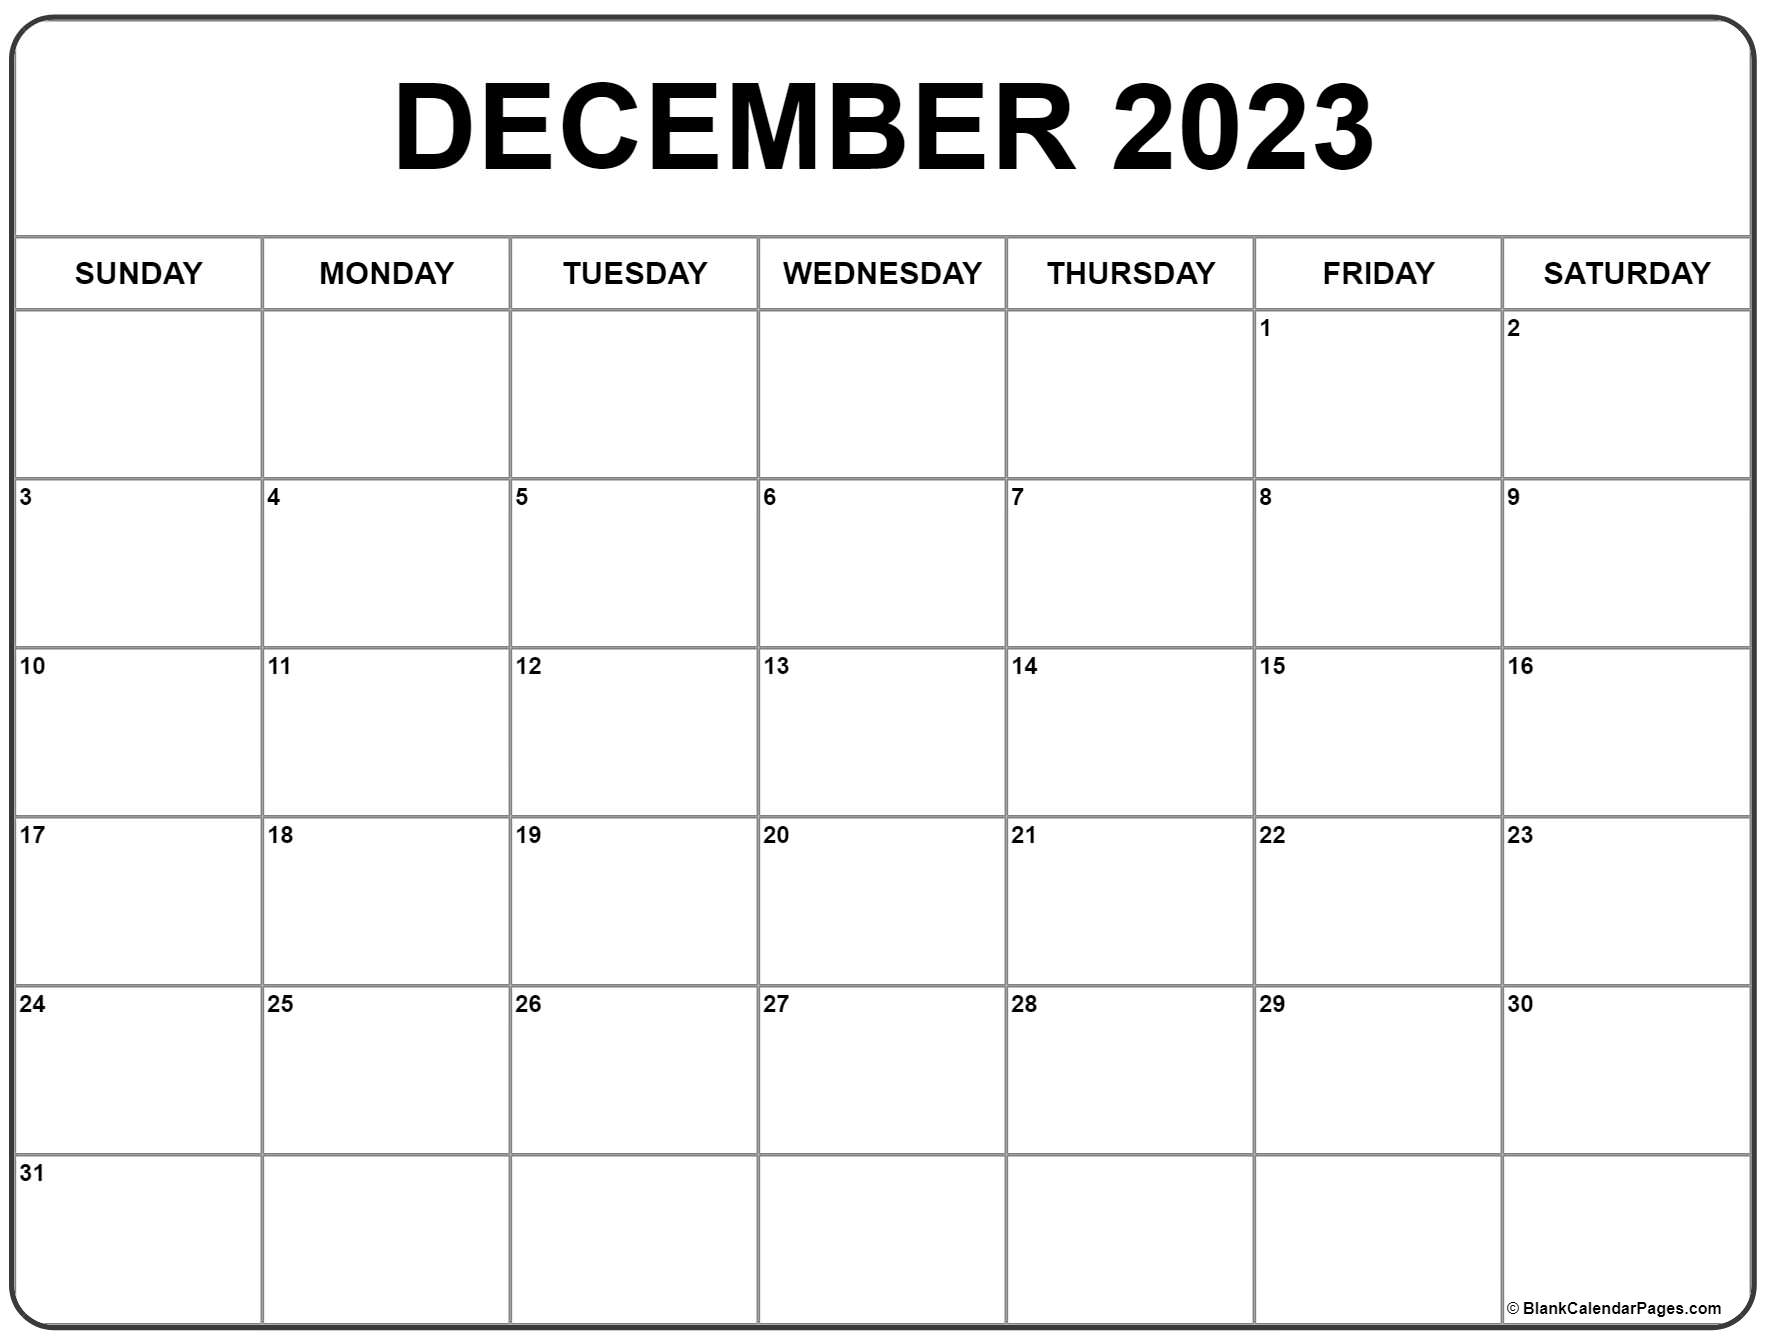 December 2023 calendar free printable calendar